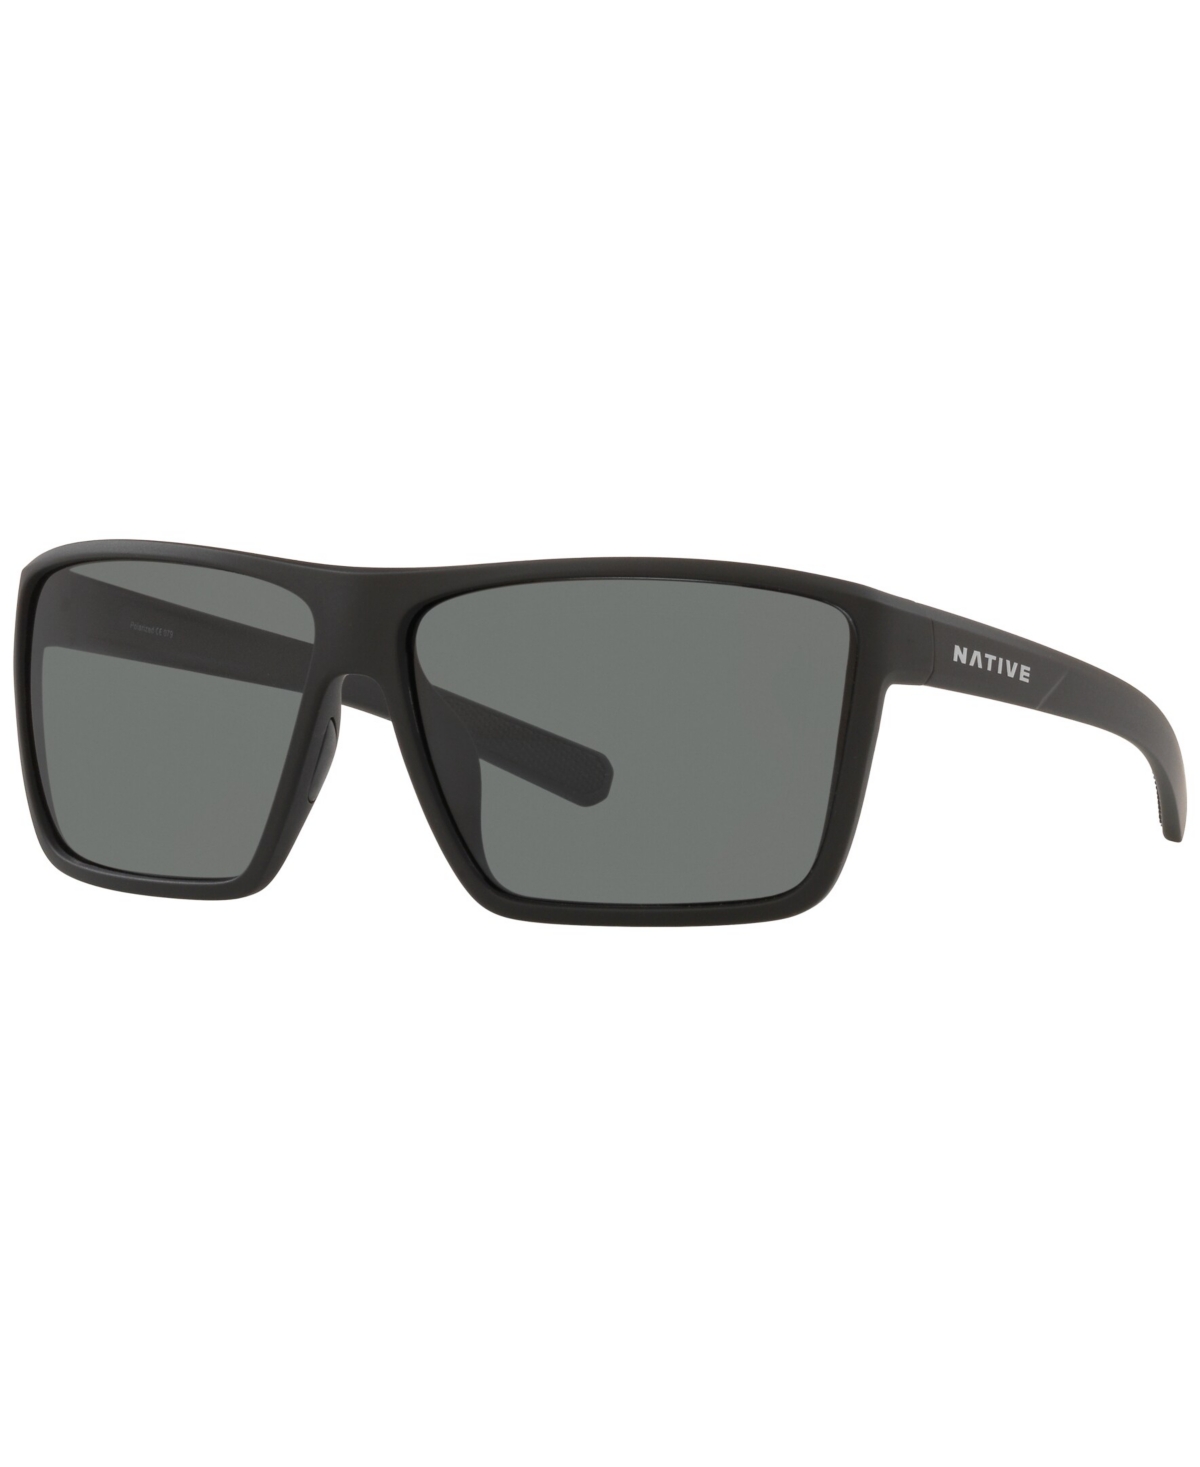 Unisex Polarized Sunglasses, Wells Xl - Matte Black